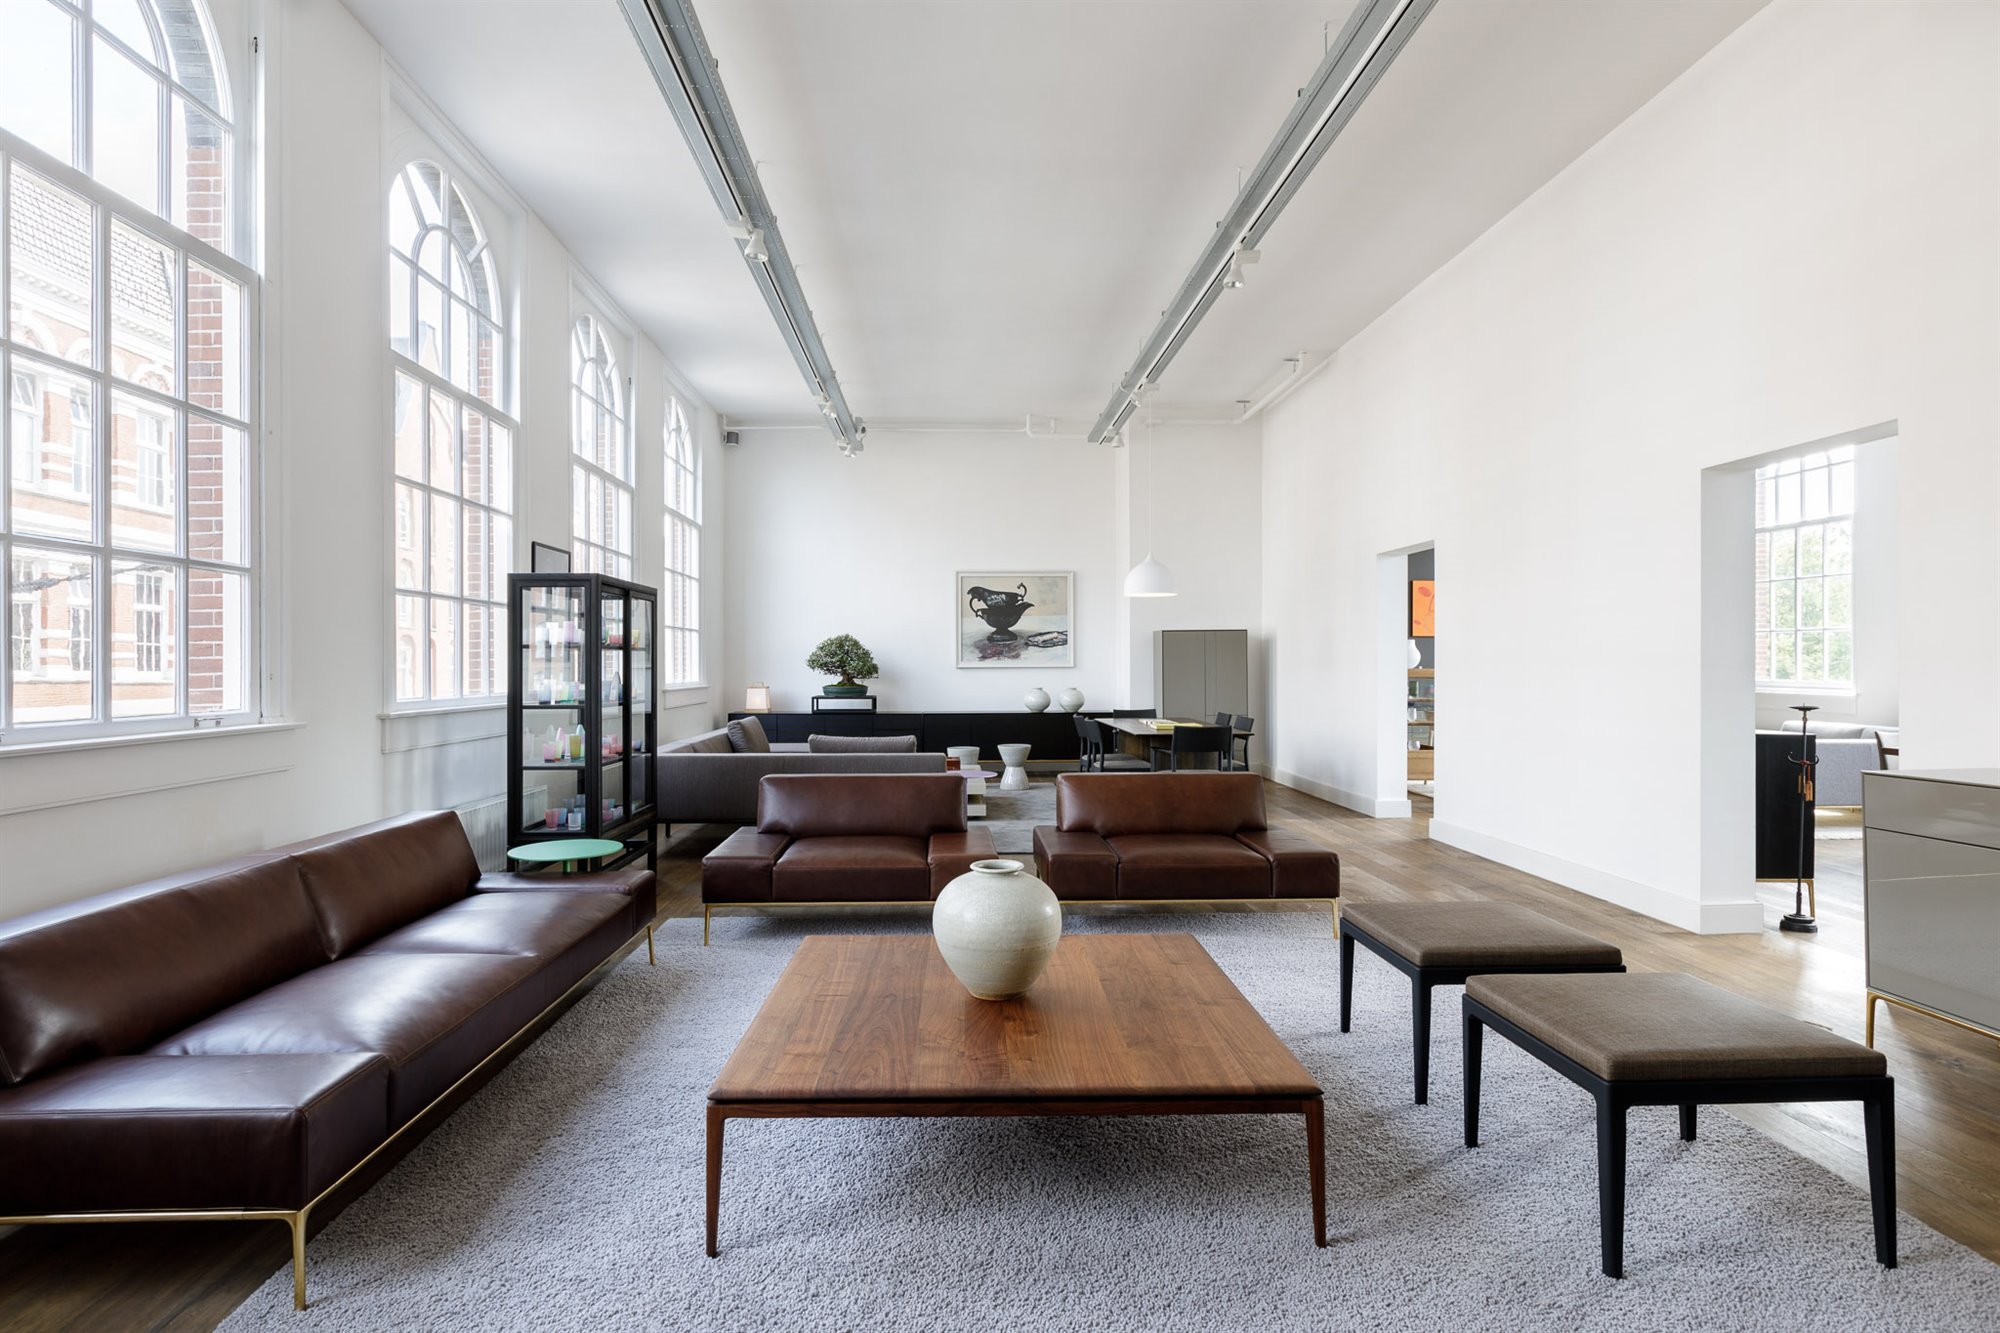 Tienda en Amsterdam de mobiliario moderno Time & Style creada por Kengo Kuma sofas de cuero marron